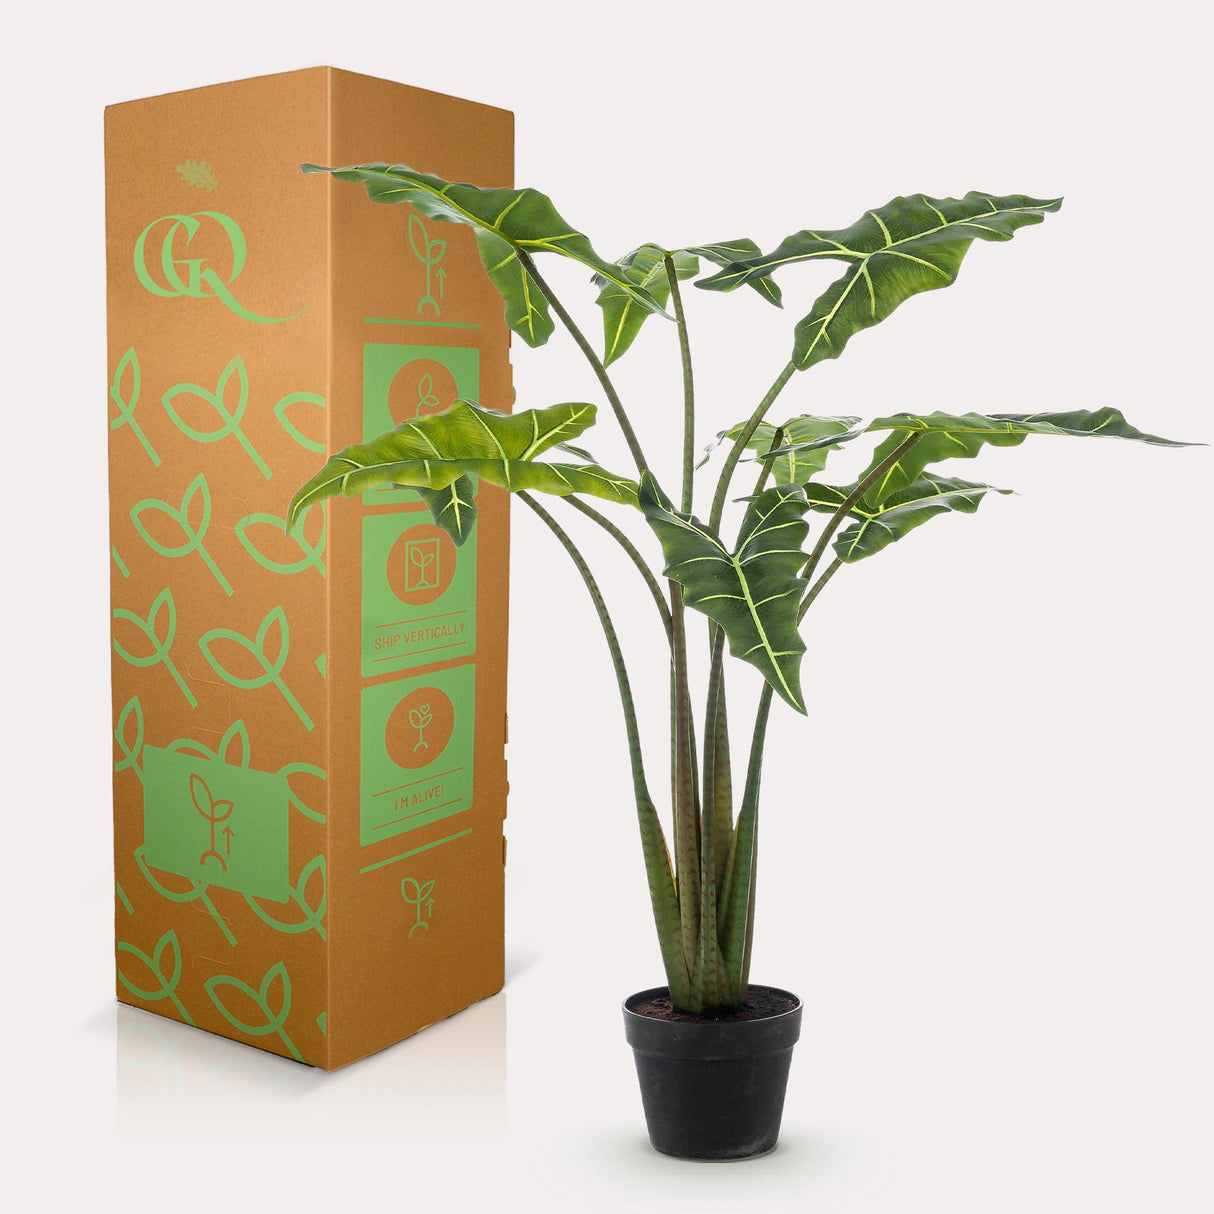 Alocasia plante artificielle - h100cm, Ø12cm